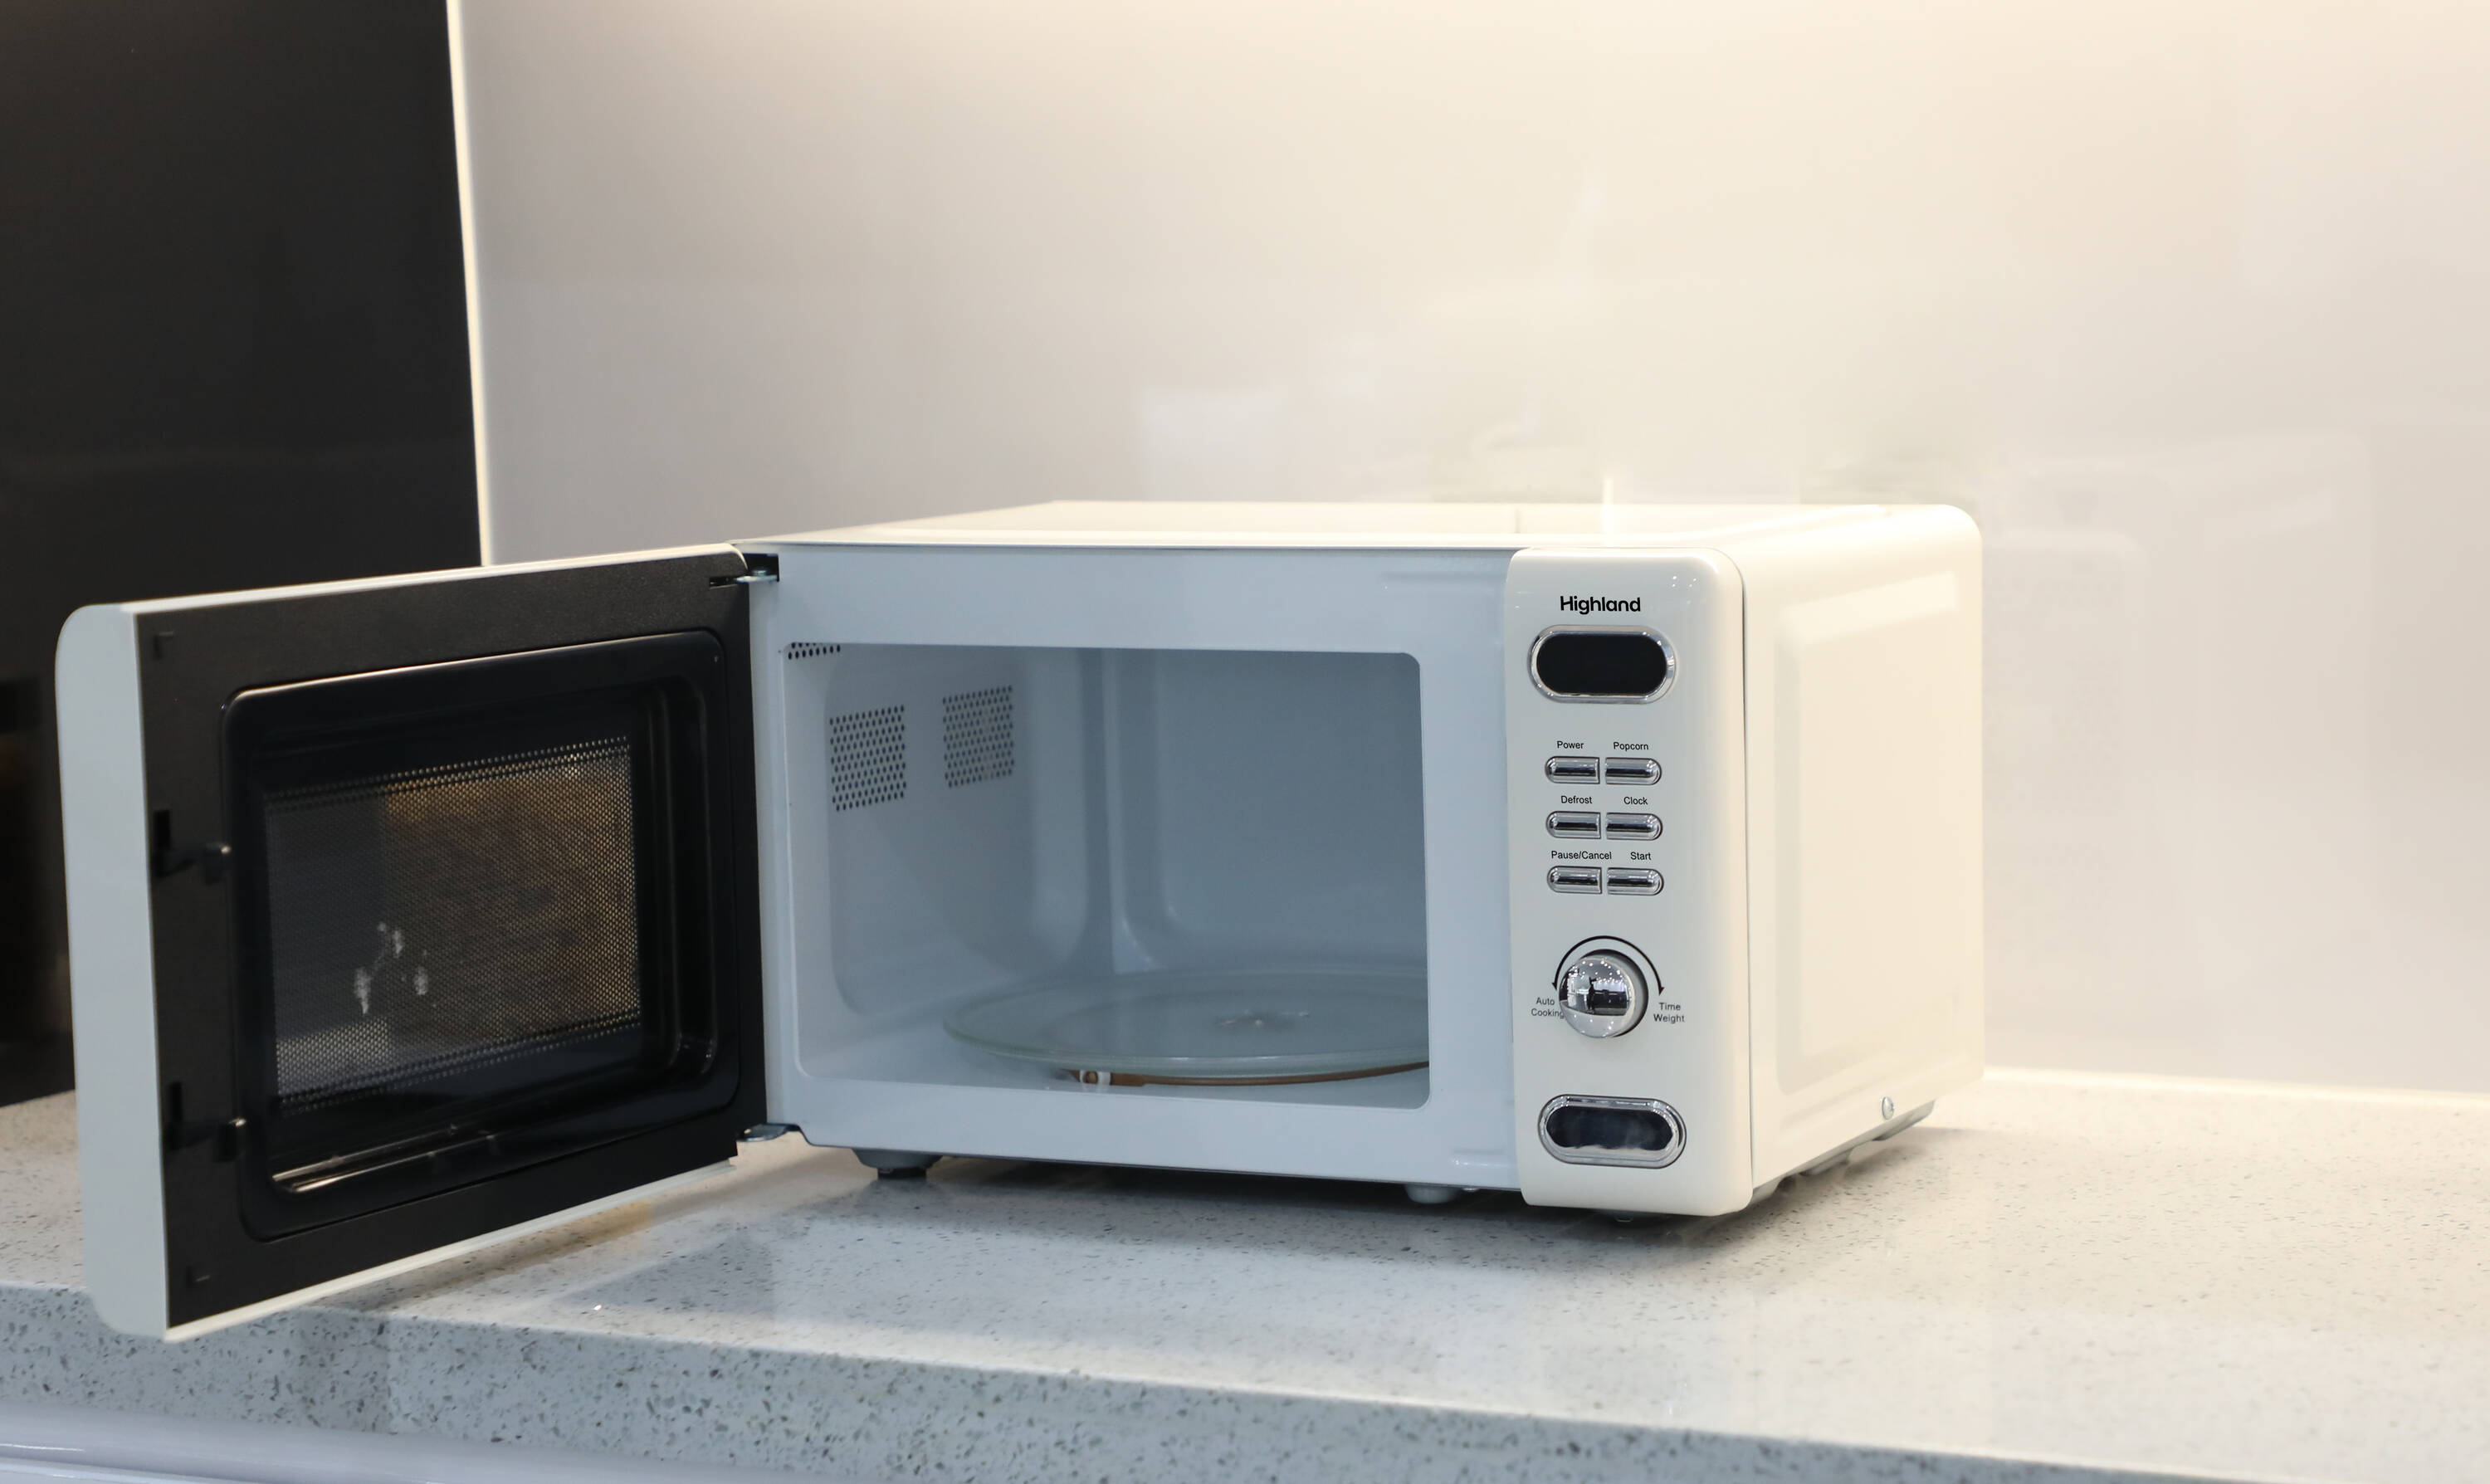 Comfee' 0.7 cu. ft. 700 Watt Compact Countertop Microwave in Cream